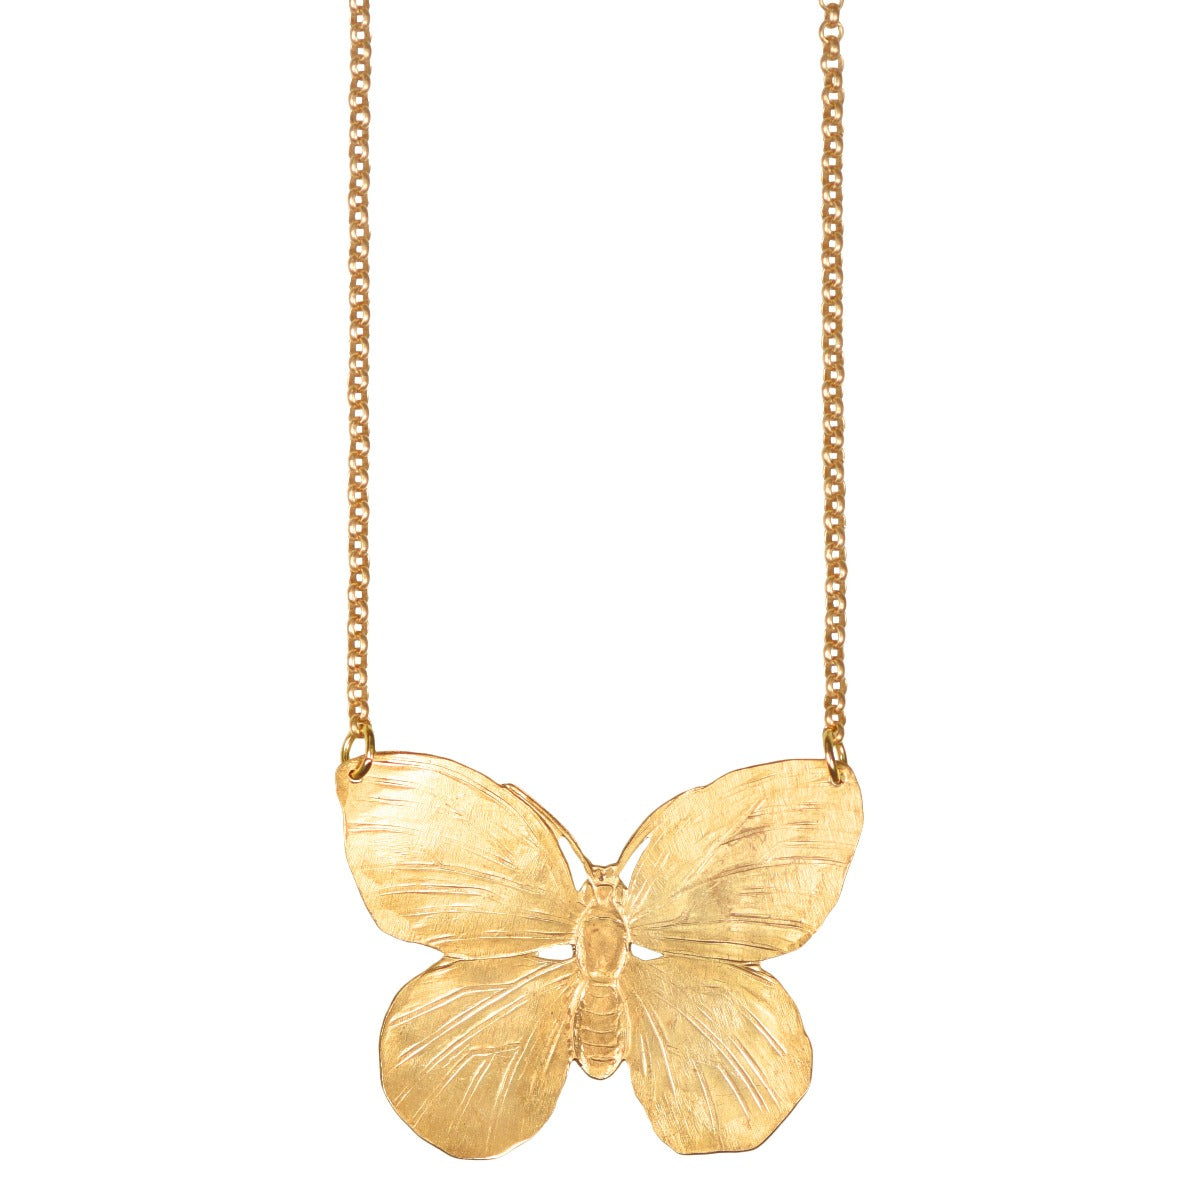 Dainty Butterfly Necklace in 14K Gold | Zales